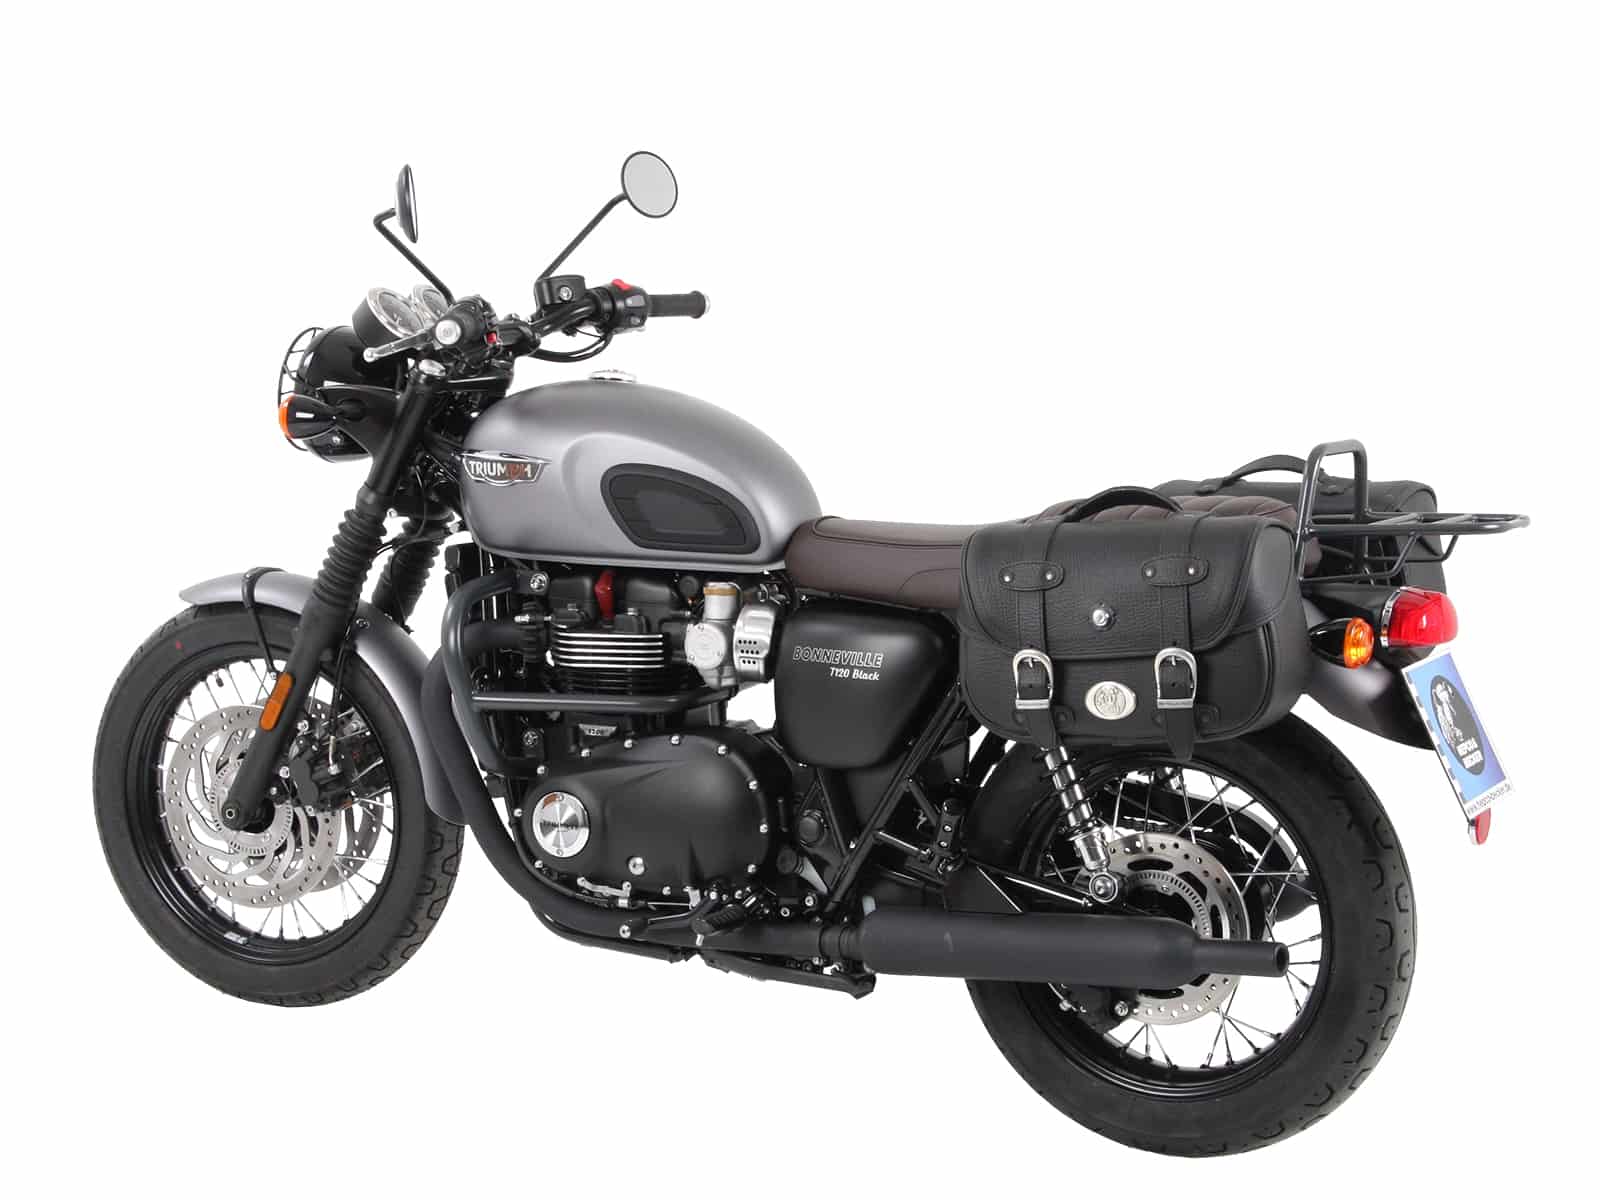 4 X MOTORCYCLE TURN SIGNAL BLACK FOR TRIUMPH DAYTONA 950 955i TT600 TROPHY 1200 